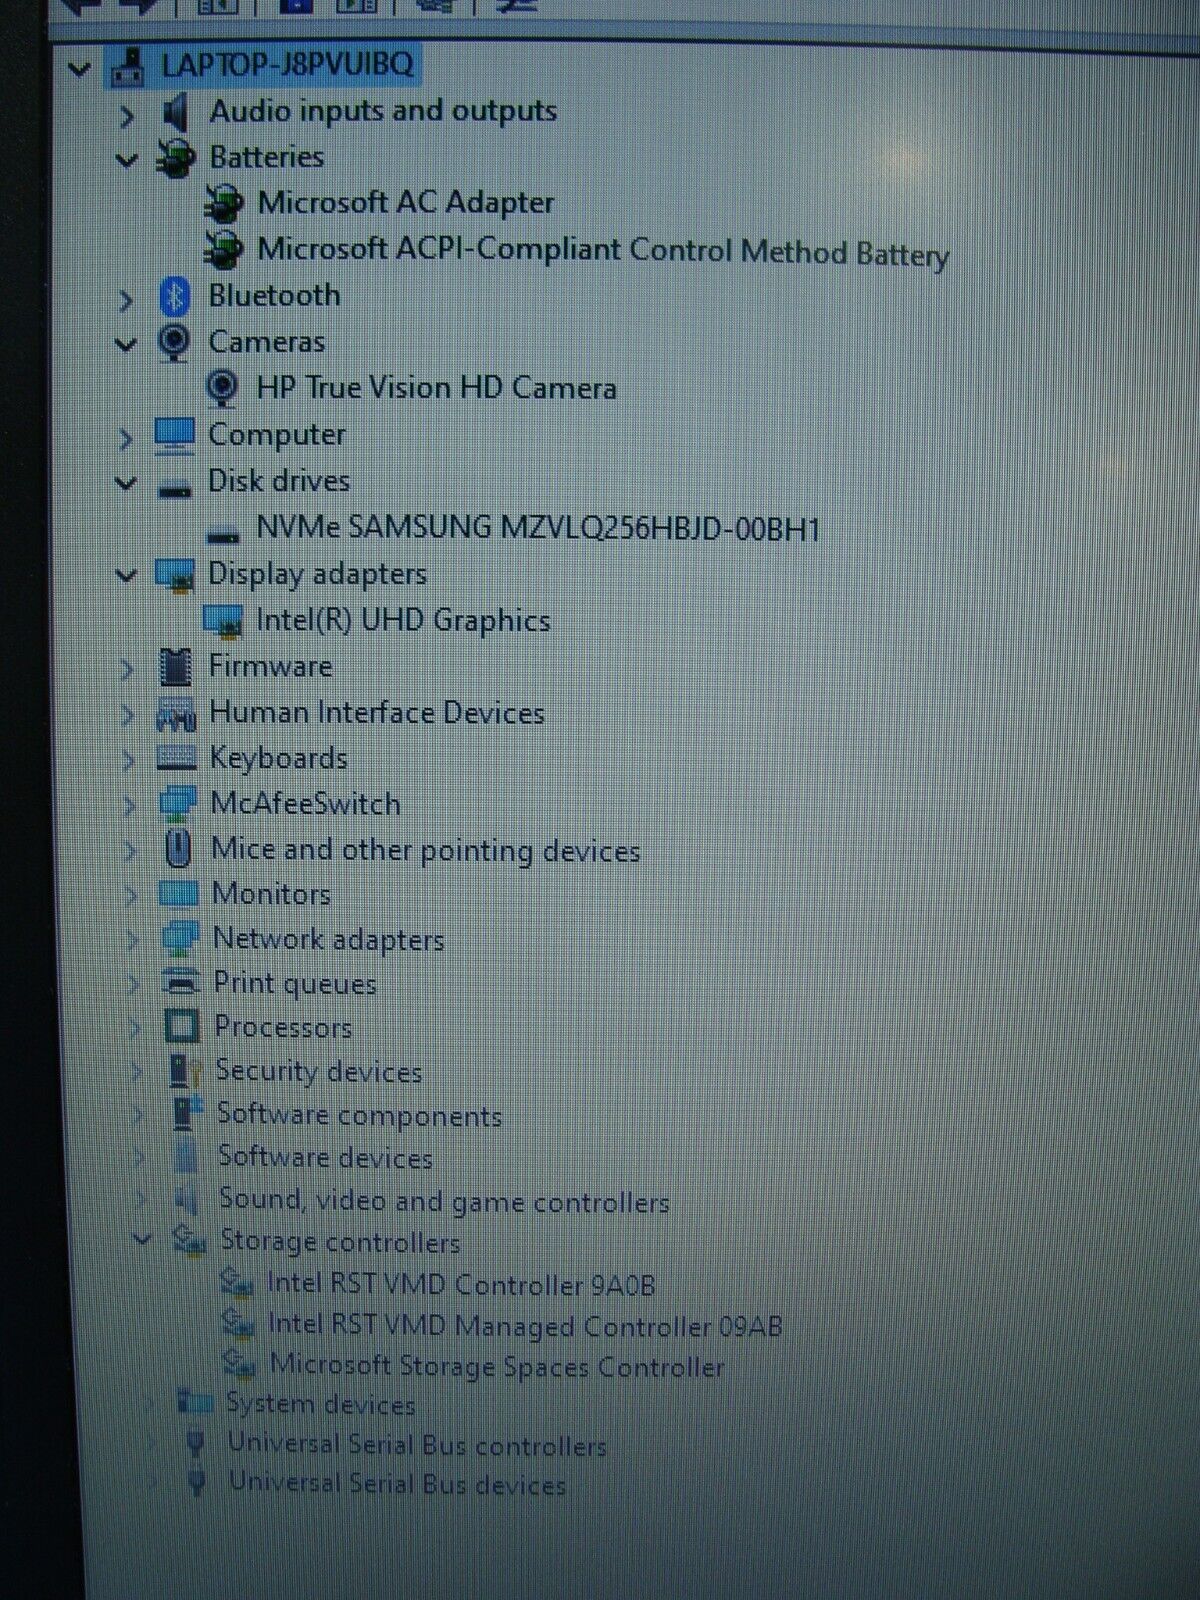 NEW! HP 17-cn0003dx Laptop 17.3 Intel i3-1125G4 2GHz 8GB 256GB SSD Warranty